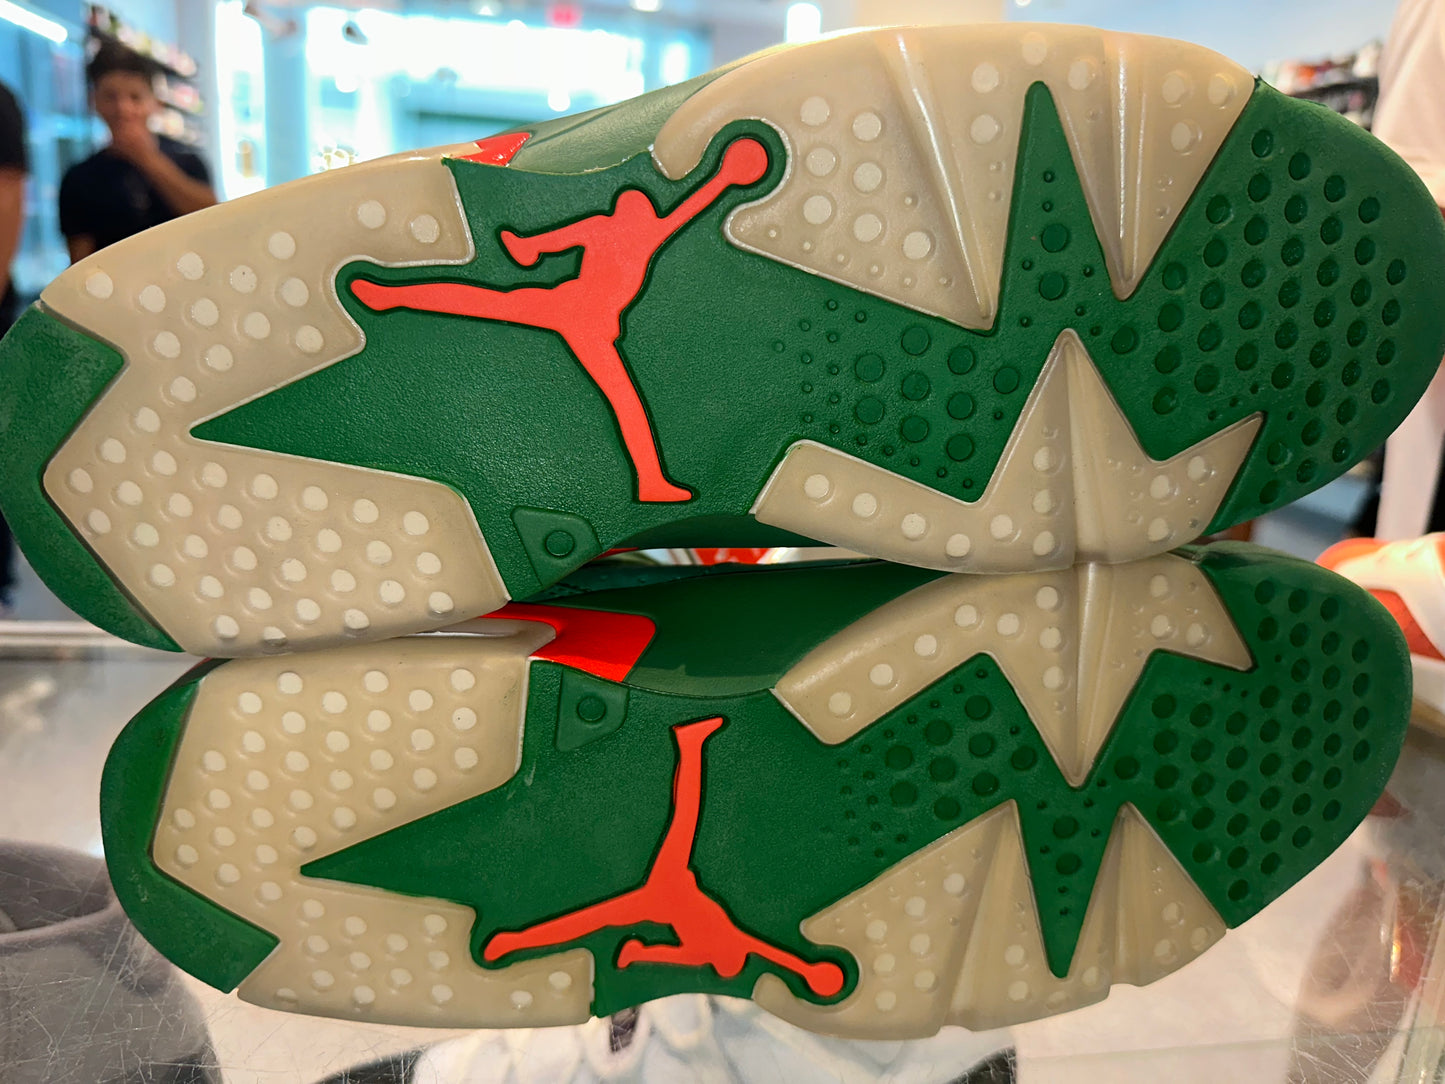 Size 11 Air Jordan 6 Gatorade “Green” Brand New (Mall)